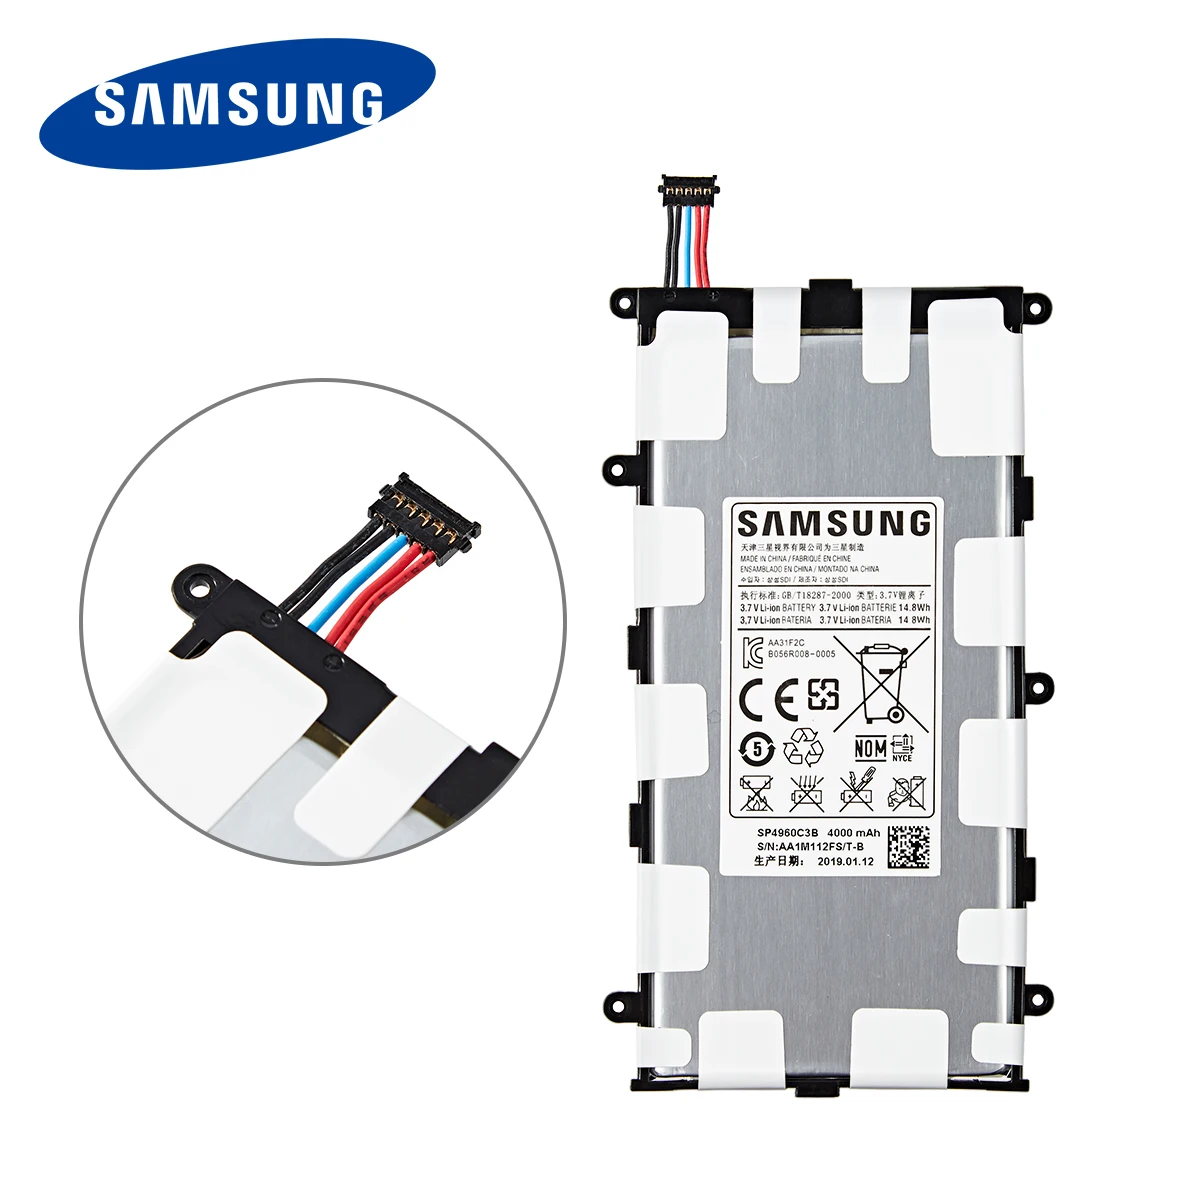 SAMSUNG Orginal Tablet SP4960C3B Battery 4000mAh For Samsung Galaxy Tab 2 7.0/7.0 Plus GT-P3100 P3100 P3110 P6200 +Tools portable phone battery